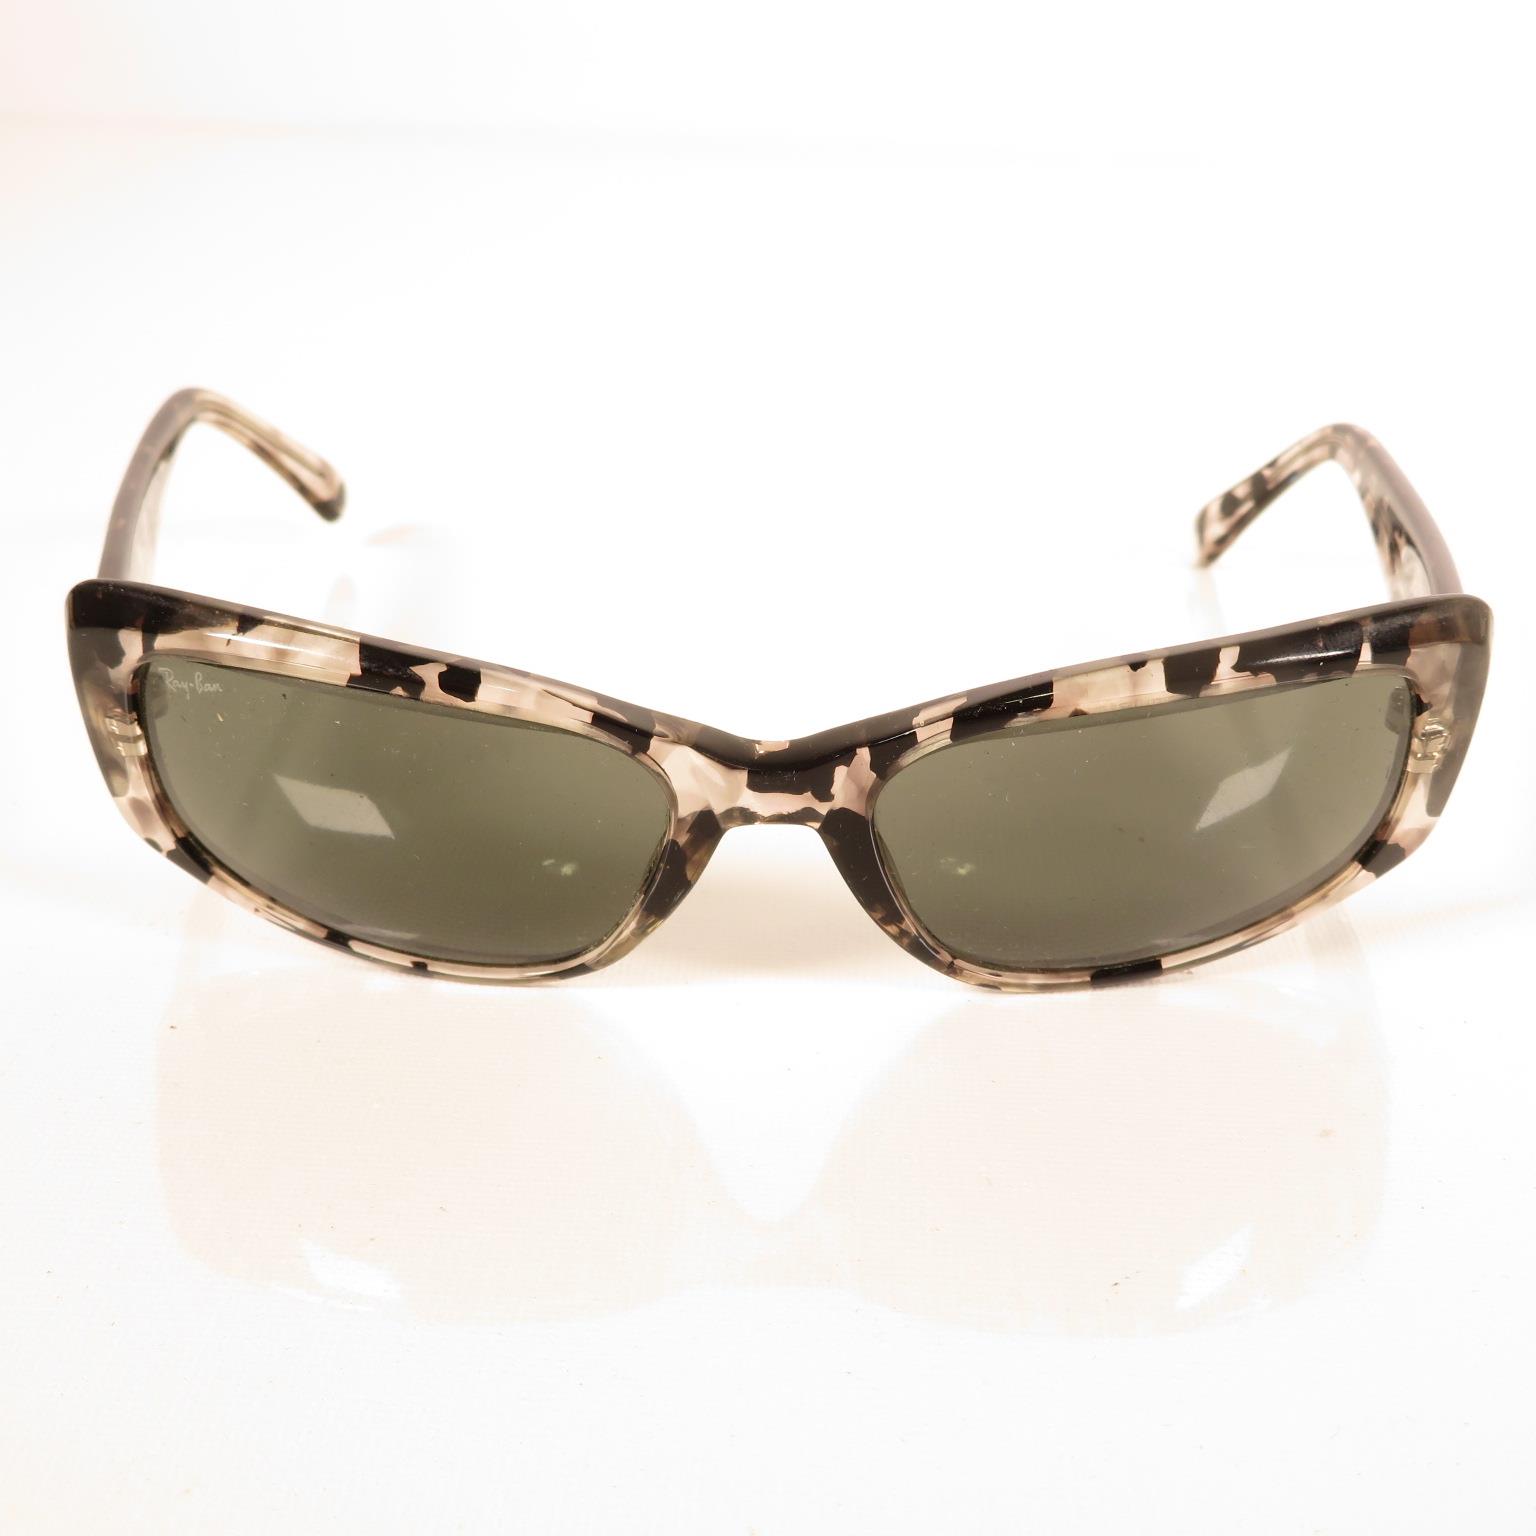 5x sets of Ray Ban sunglasses - - Image 20 of 23